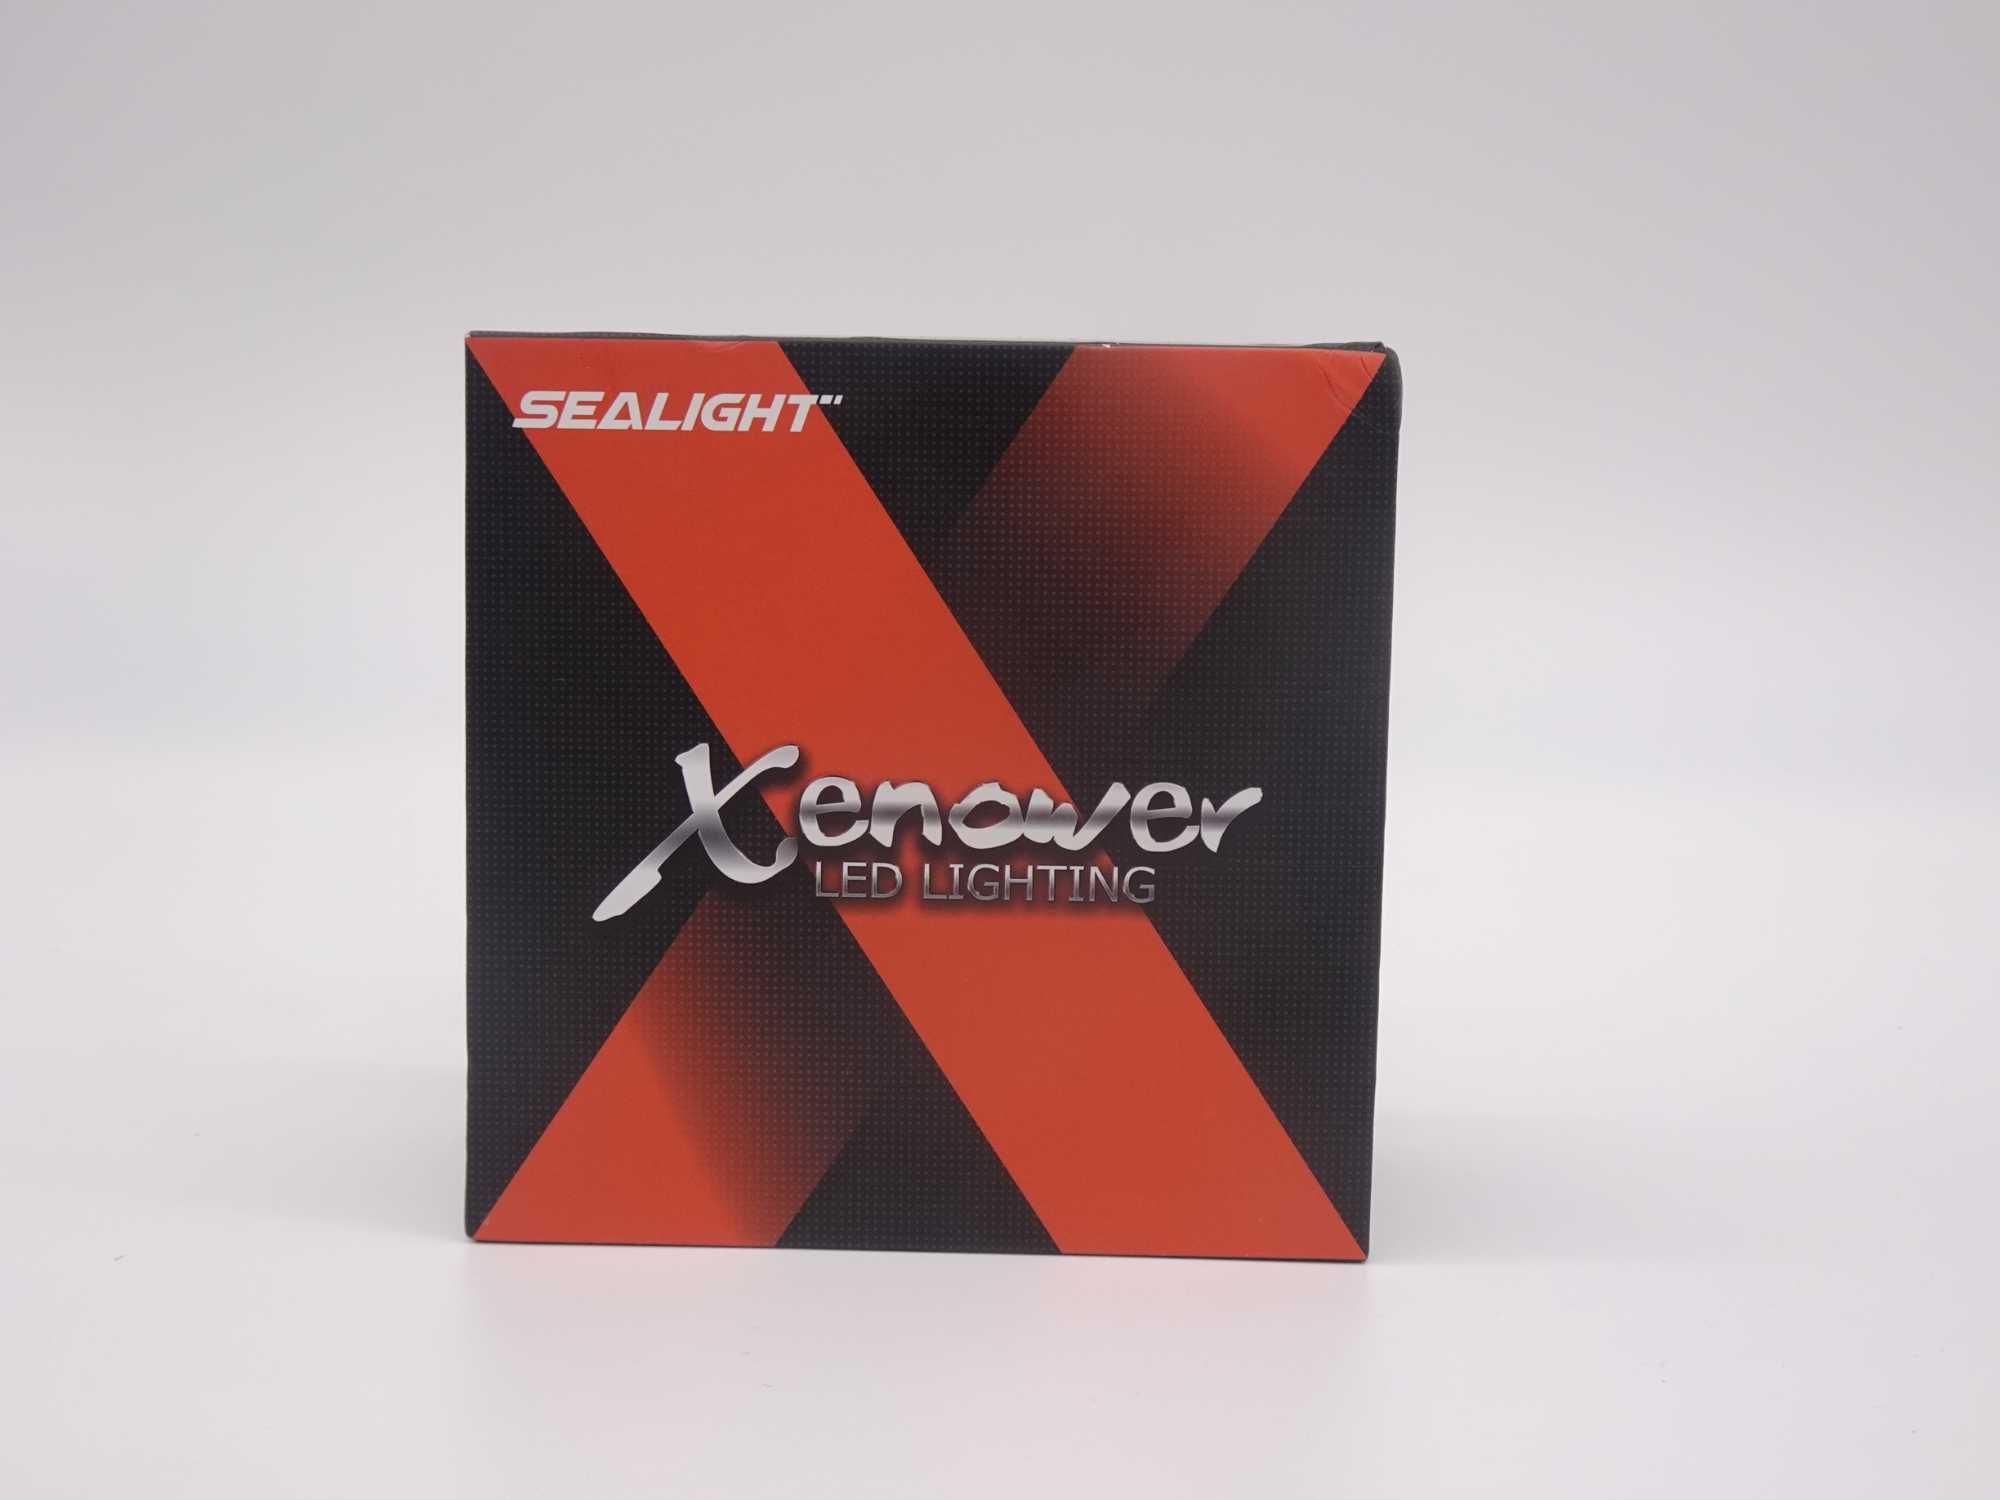 SEALIGHT Xenower X2 H11 hard